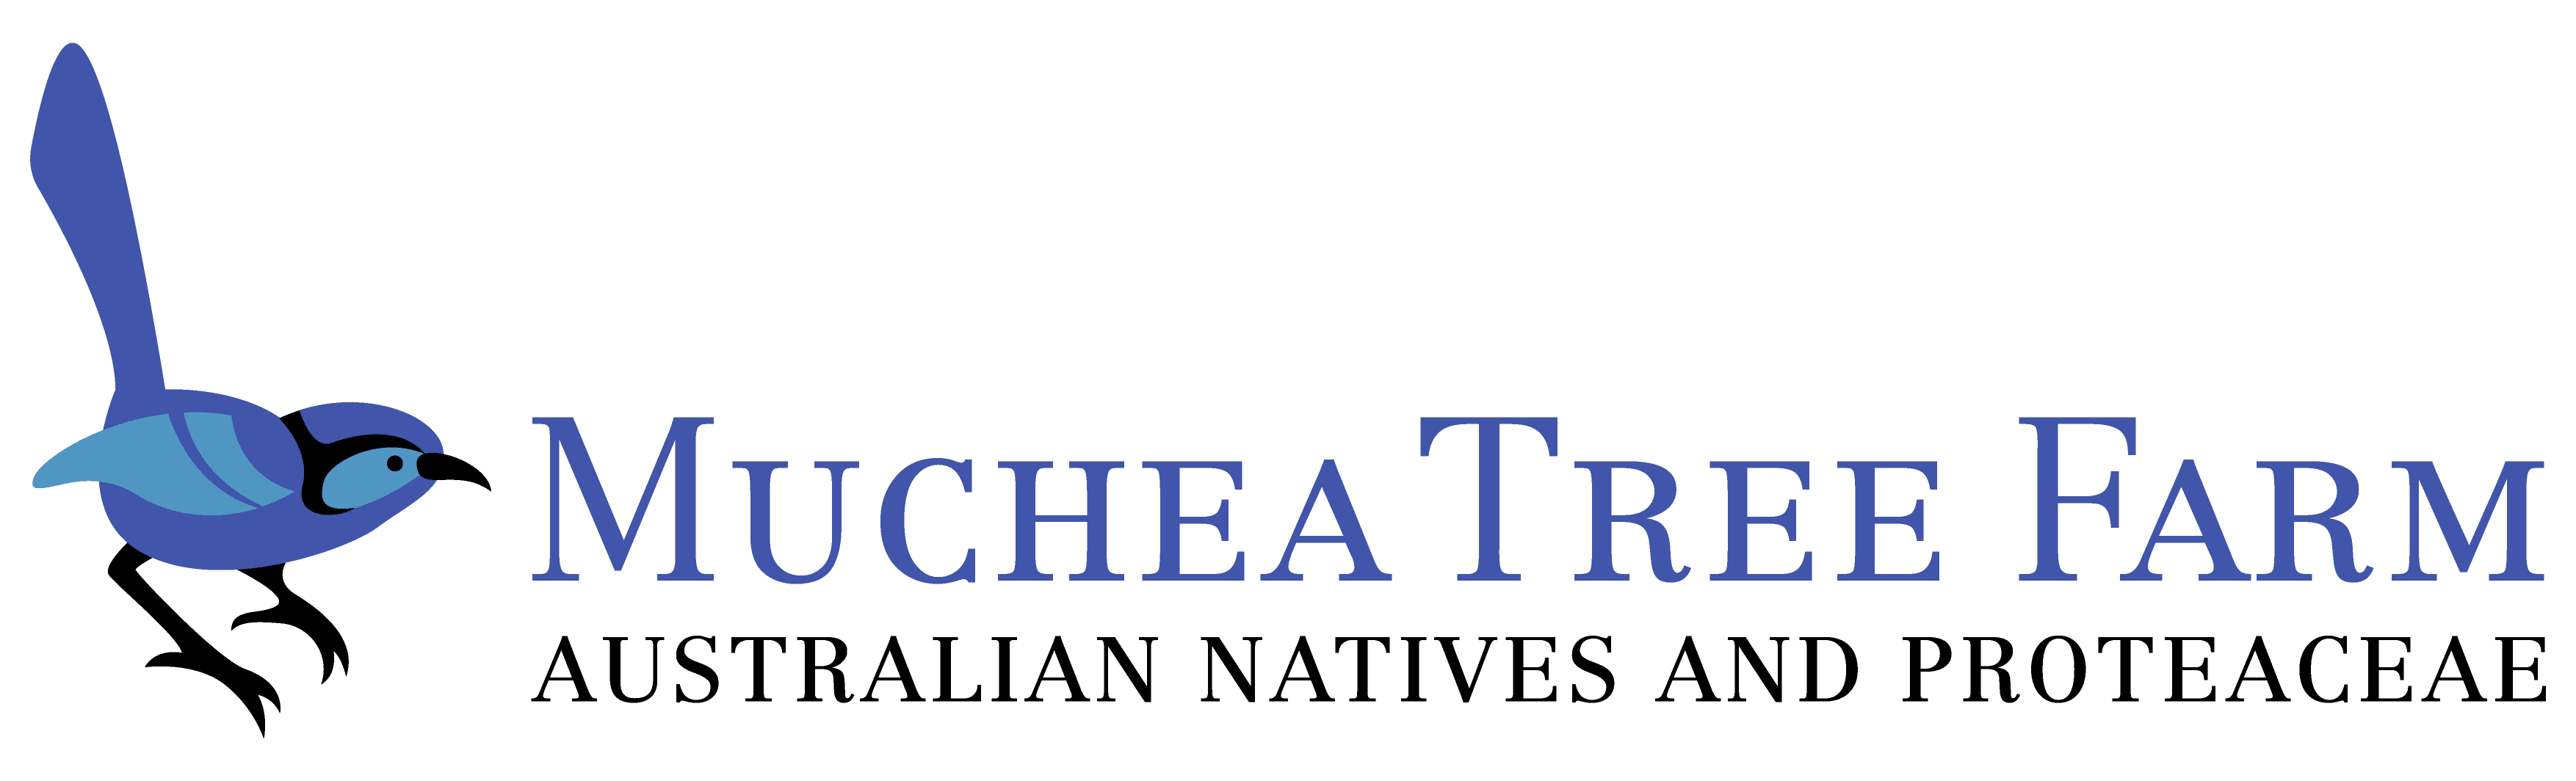 2019_T3_W2/Quiz_night_logos/muchea-tree-farm-logo_slogan.png